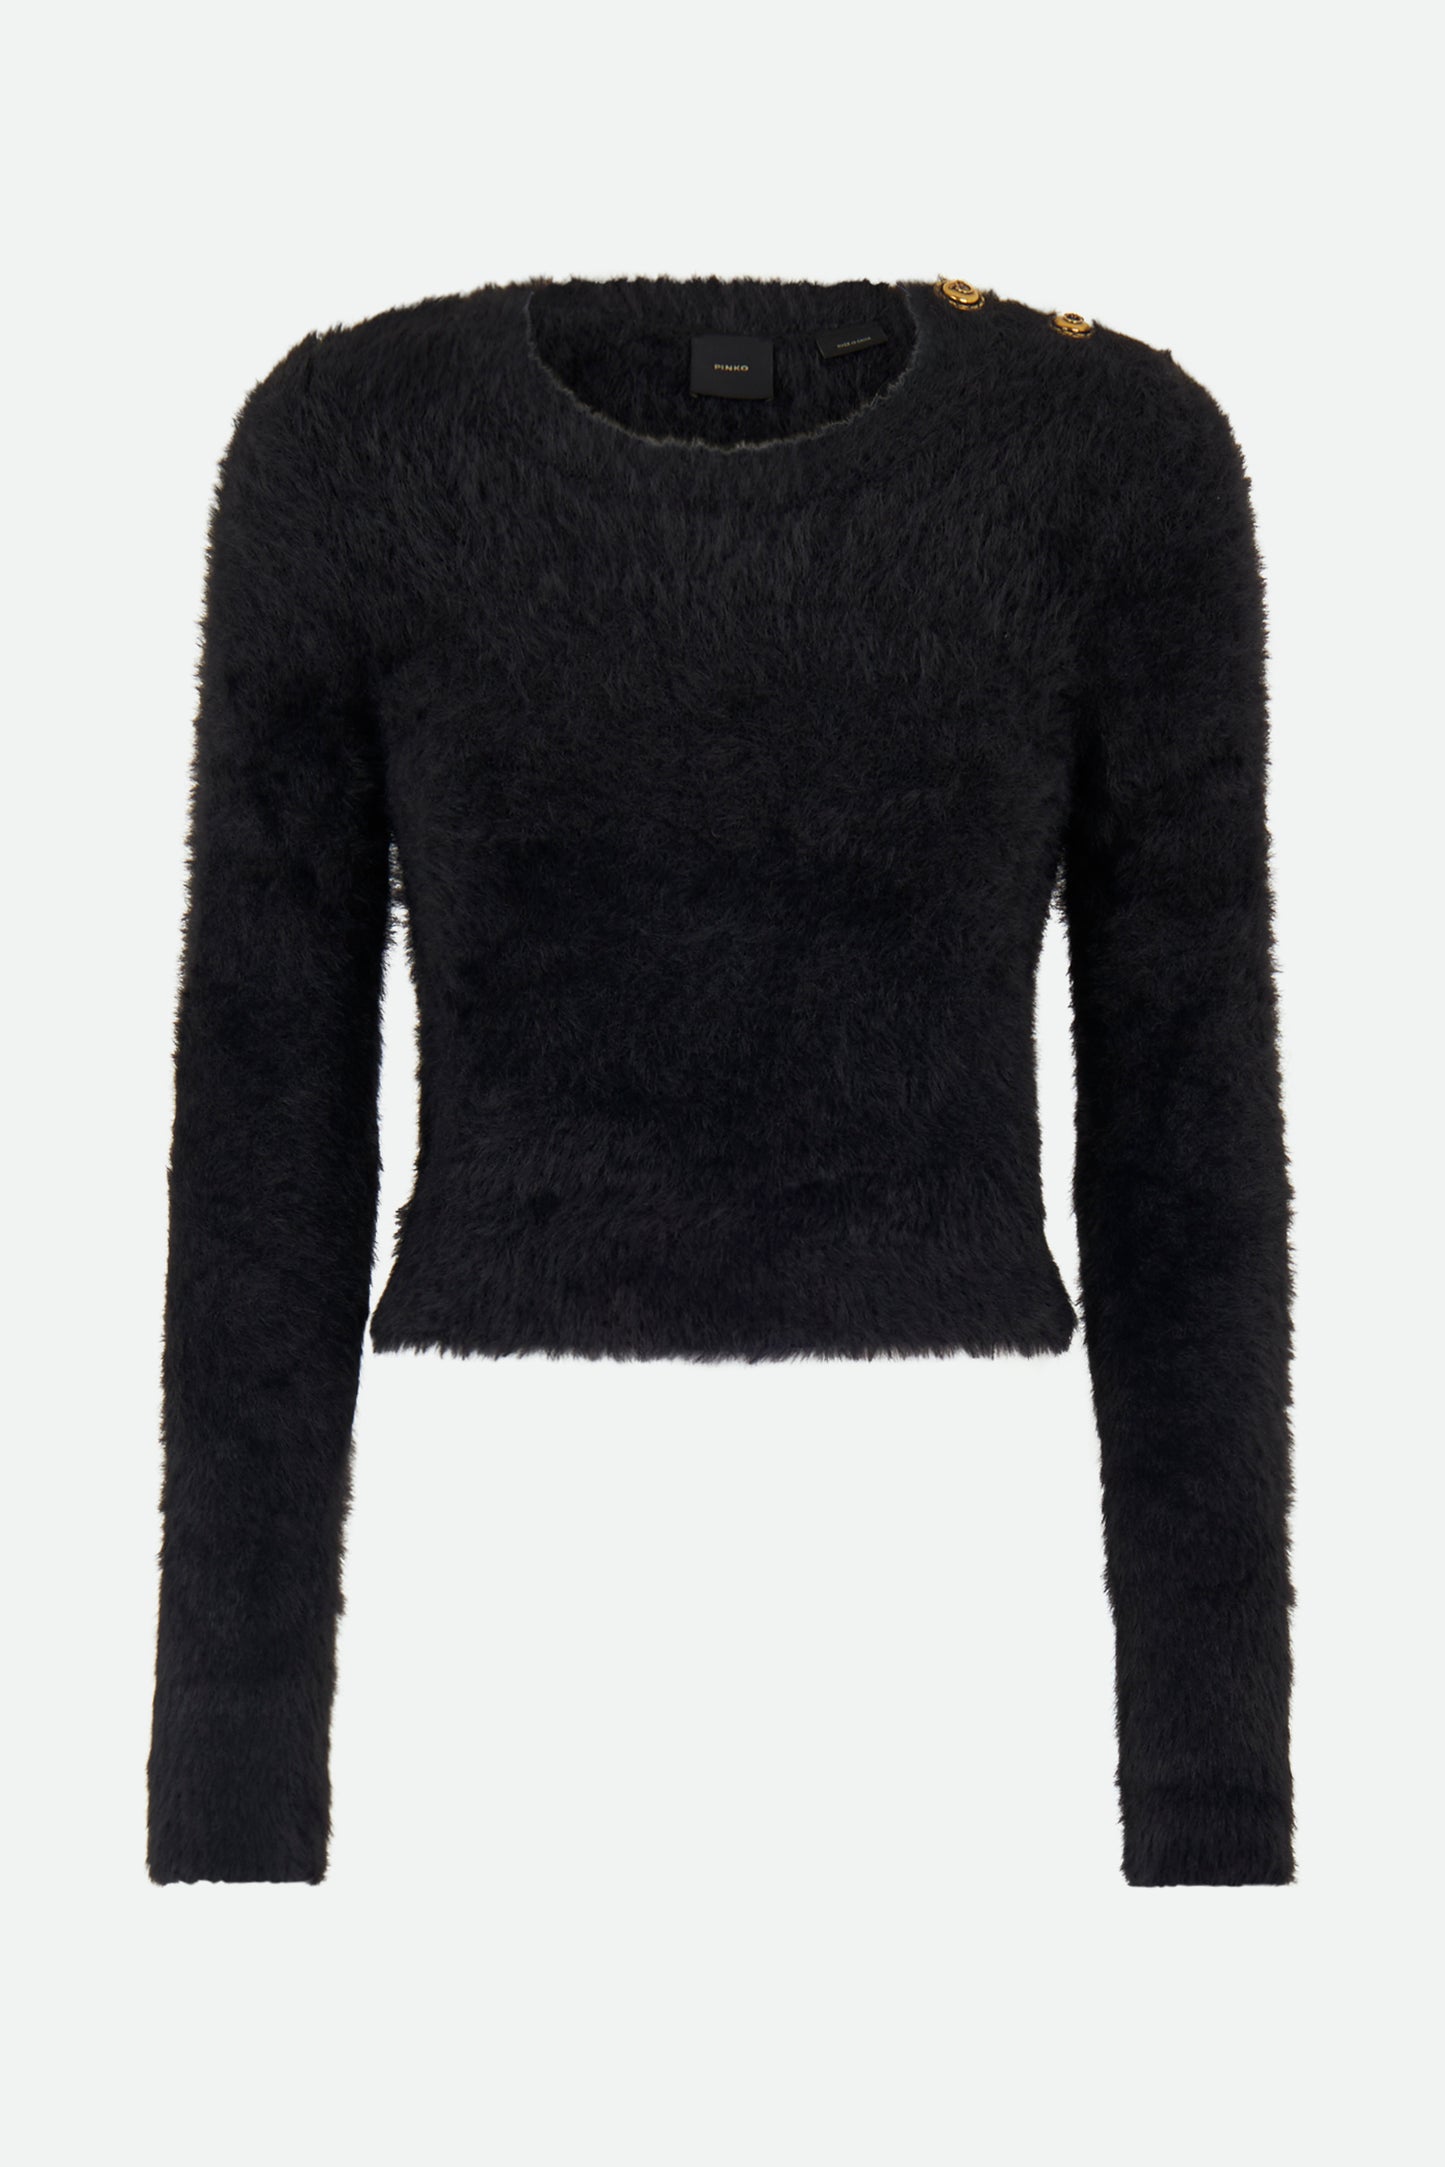 Pinko Black Sweater